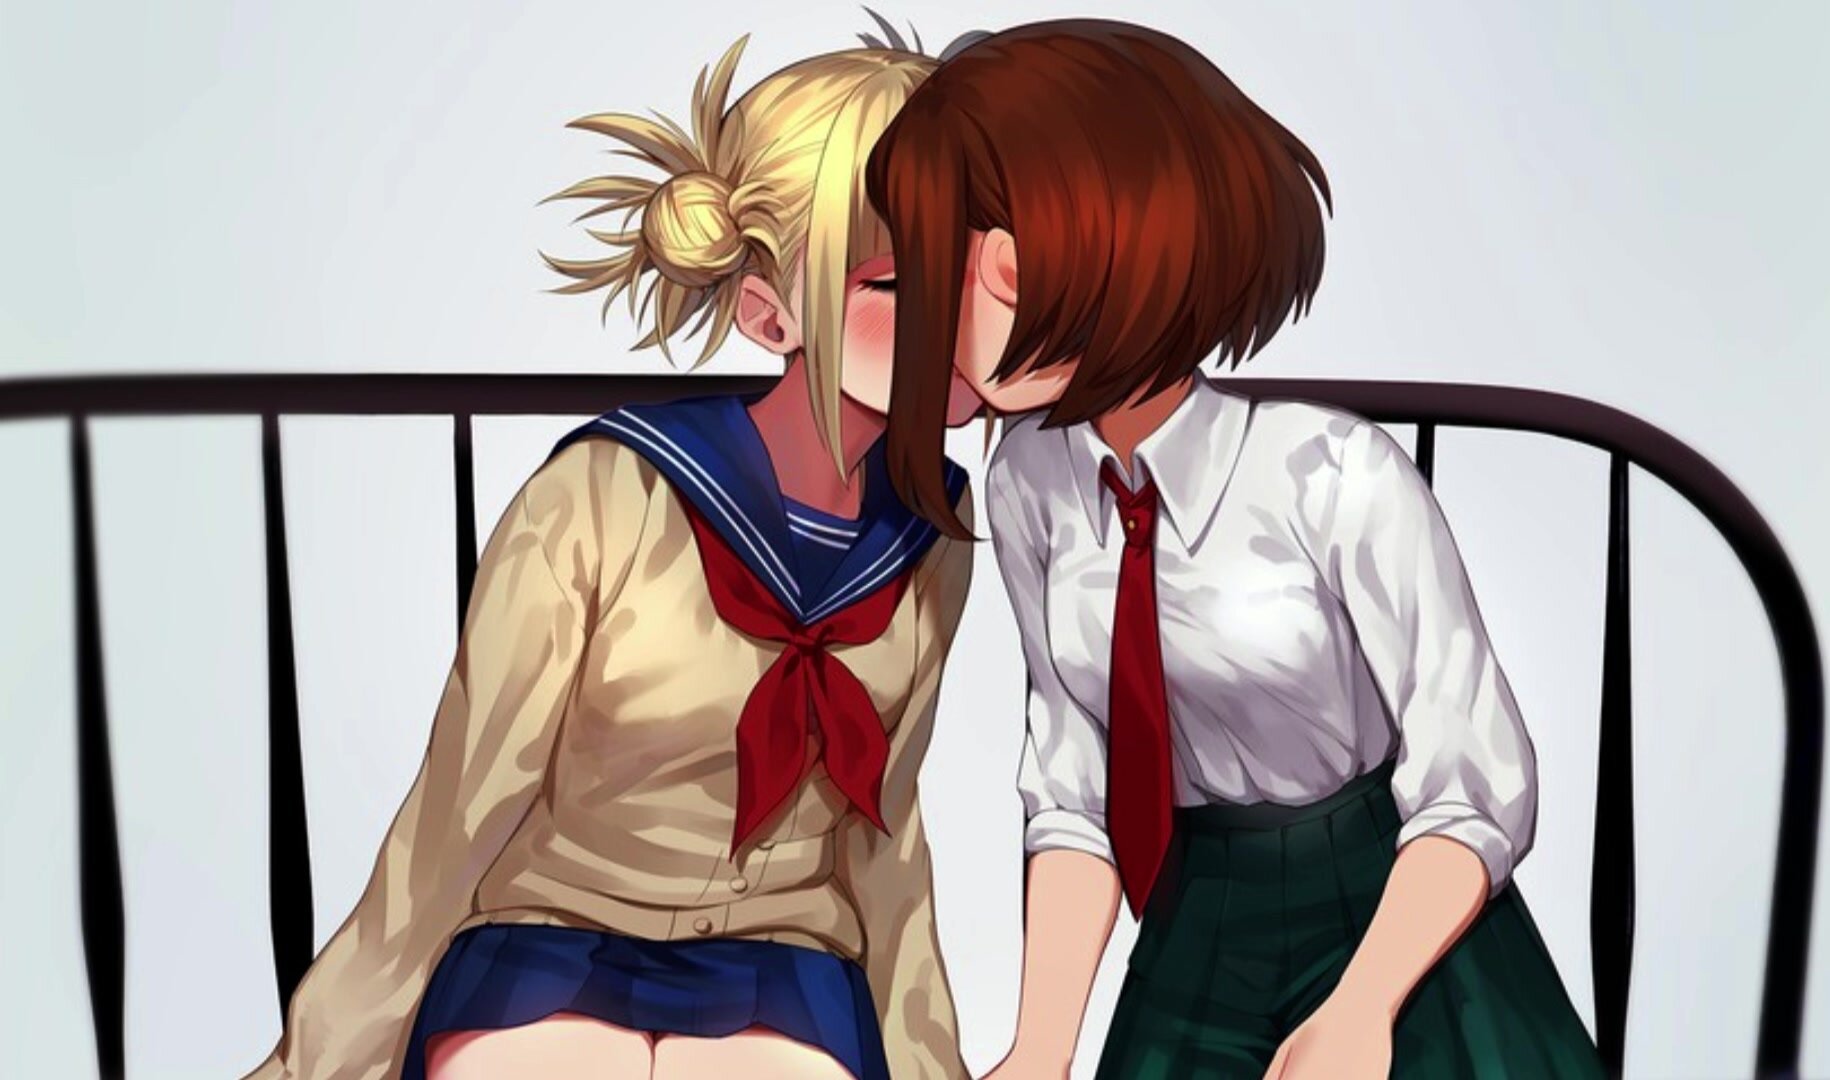 Toga kissing her girl